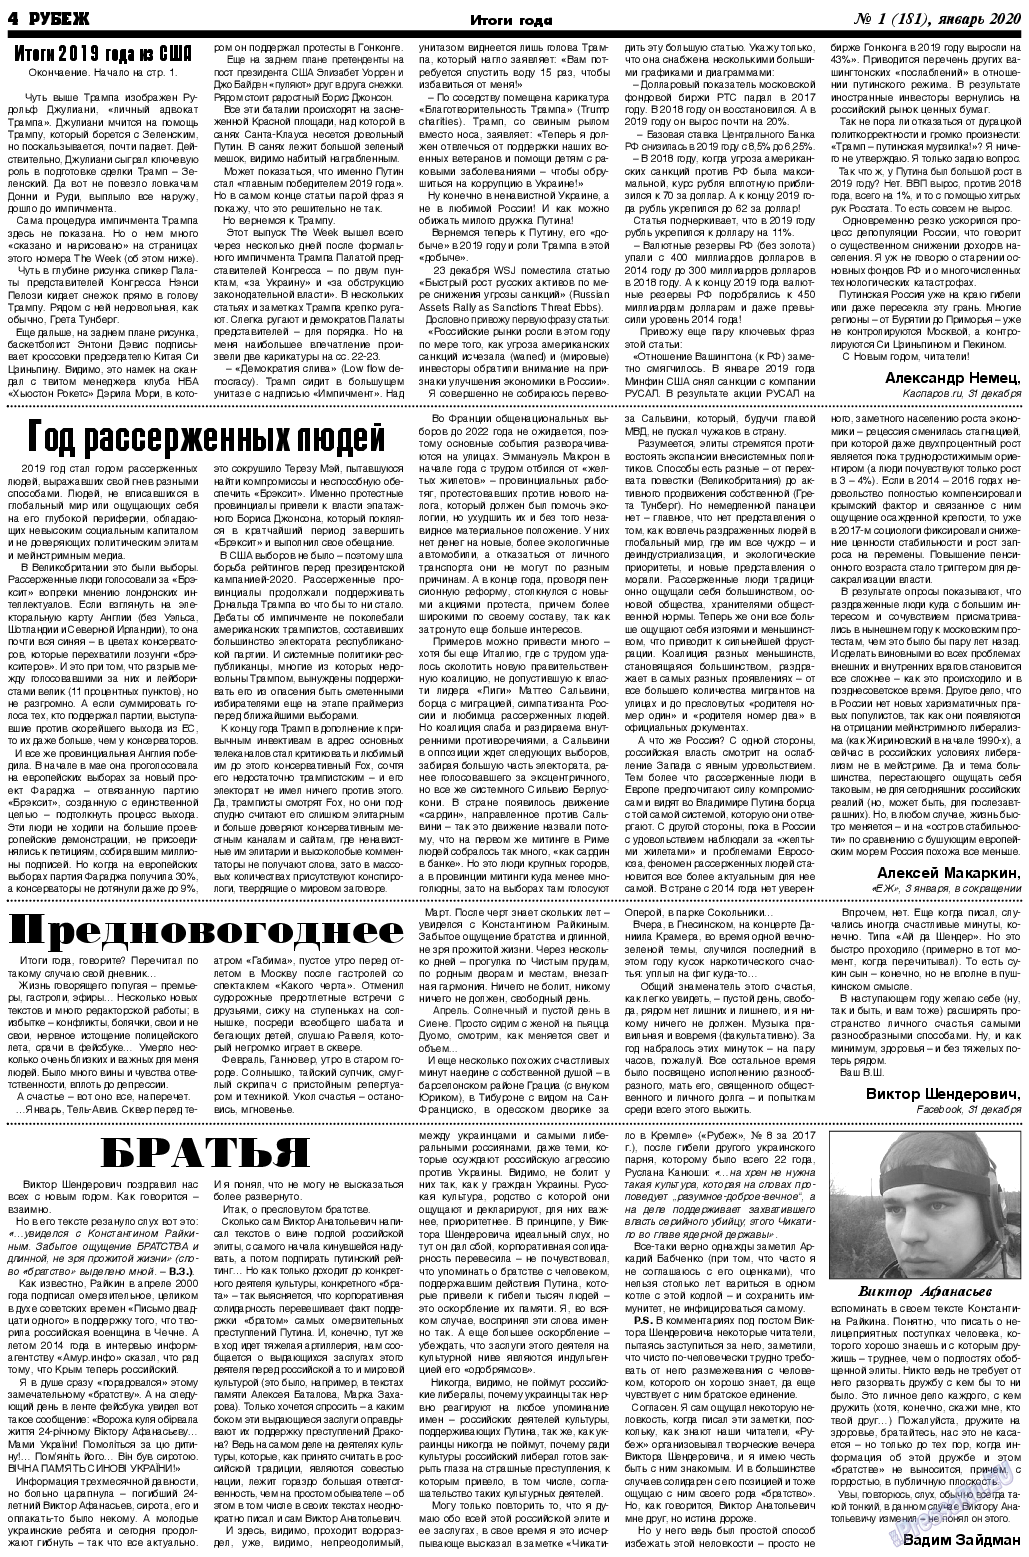 Рубеж, газета. 2020 №1 стр.4